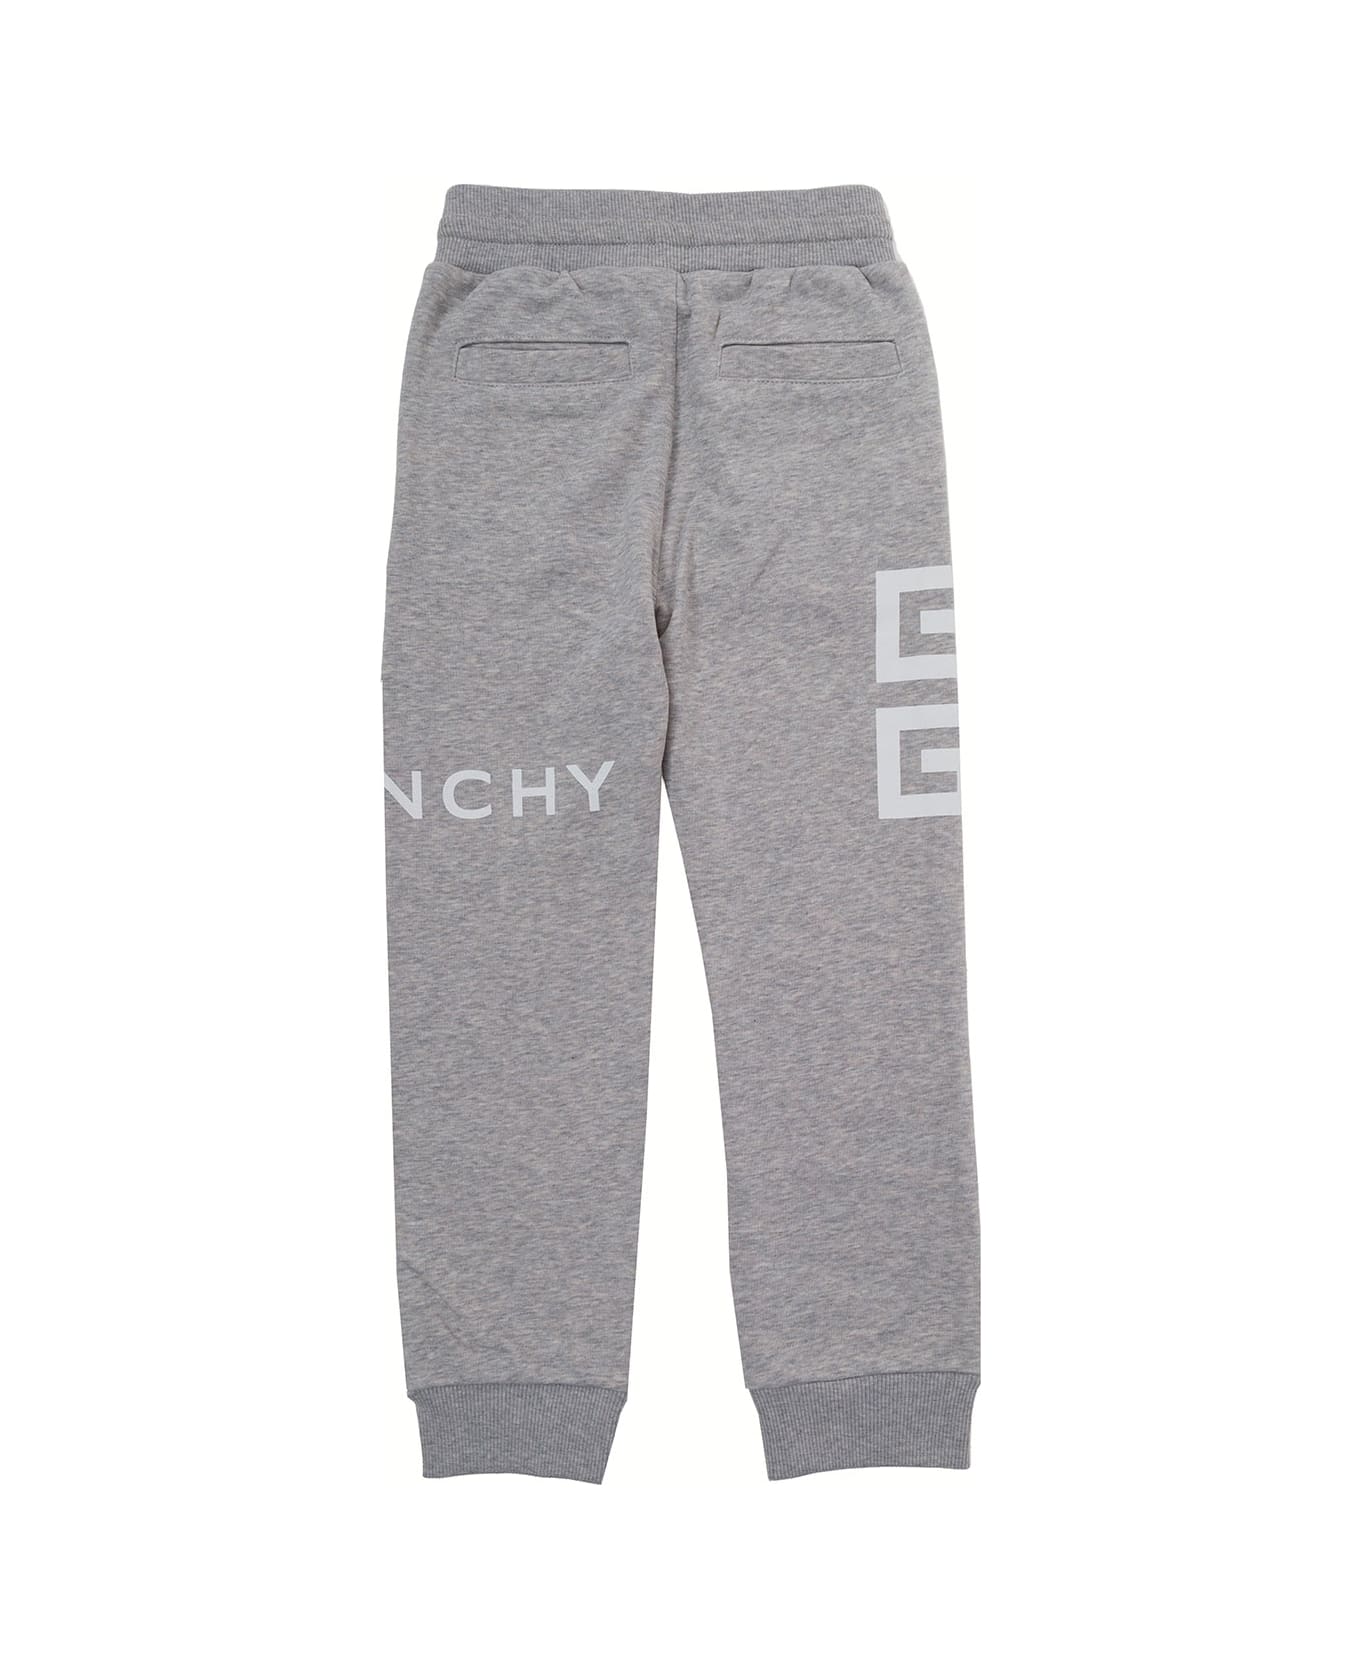 Givenchy Boy Blend Cotton Grey Jogger Pants With Logo - Grey